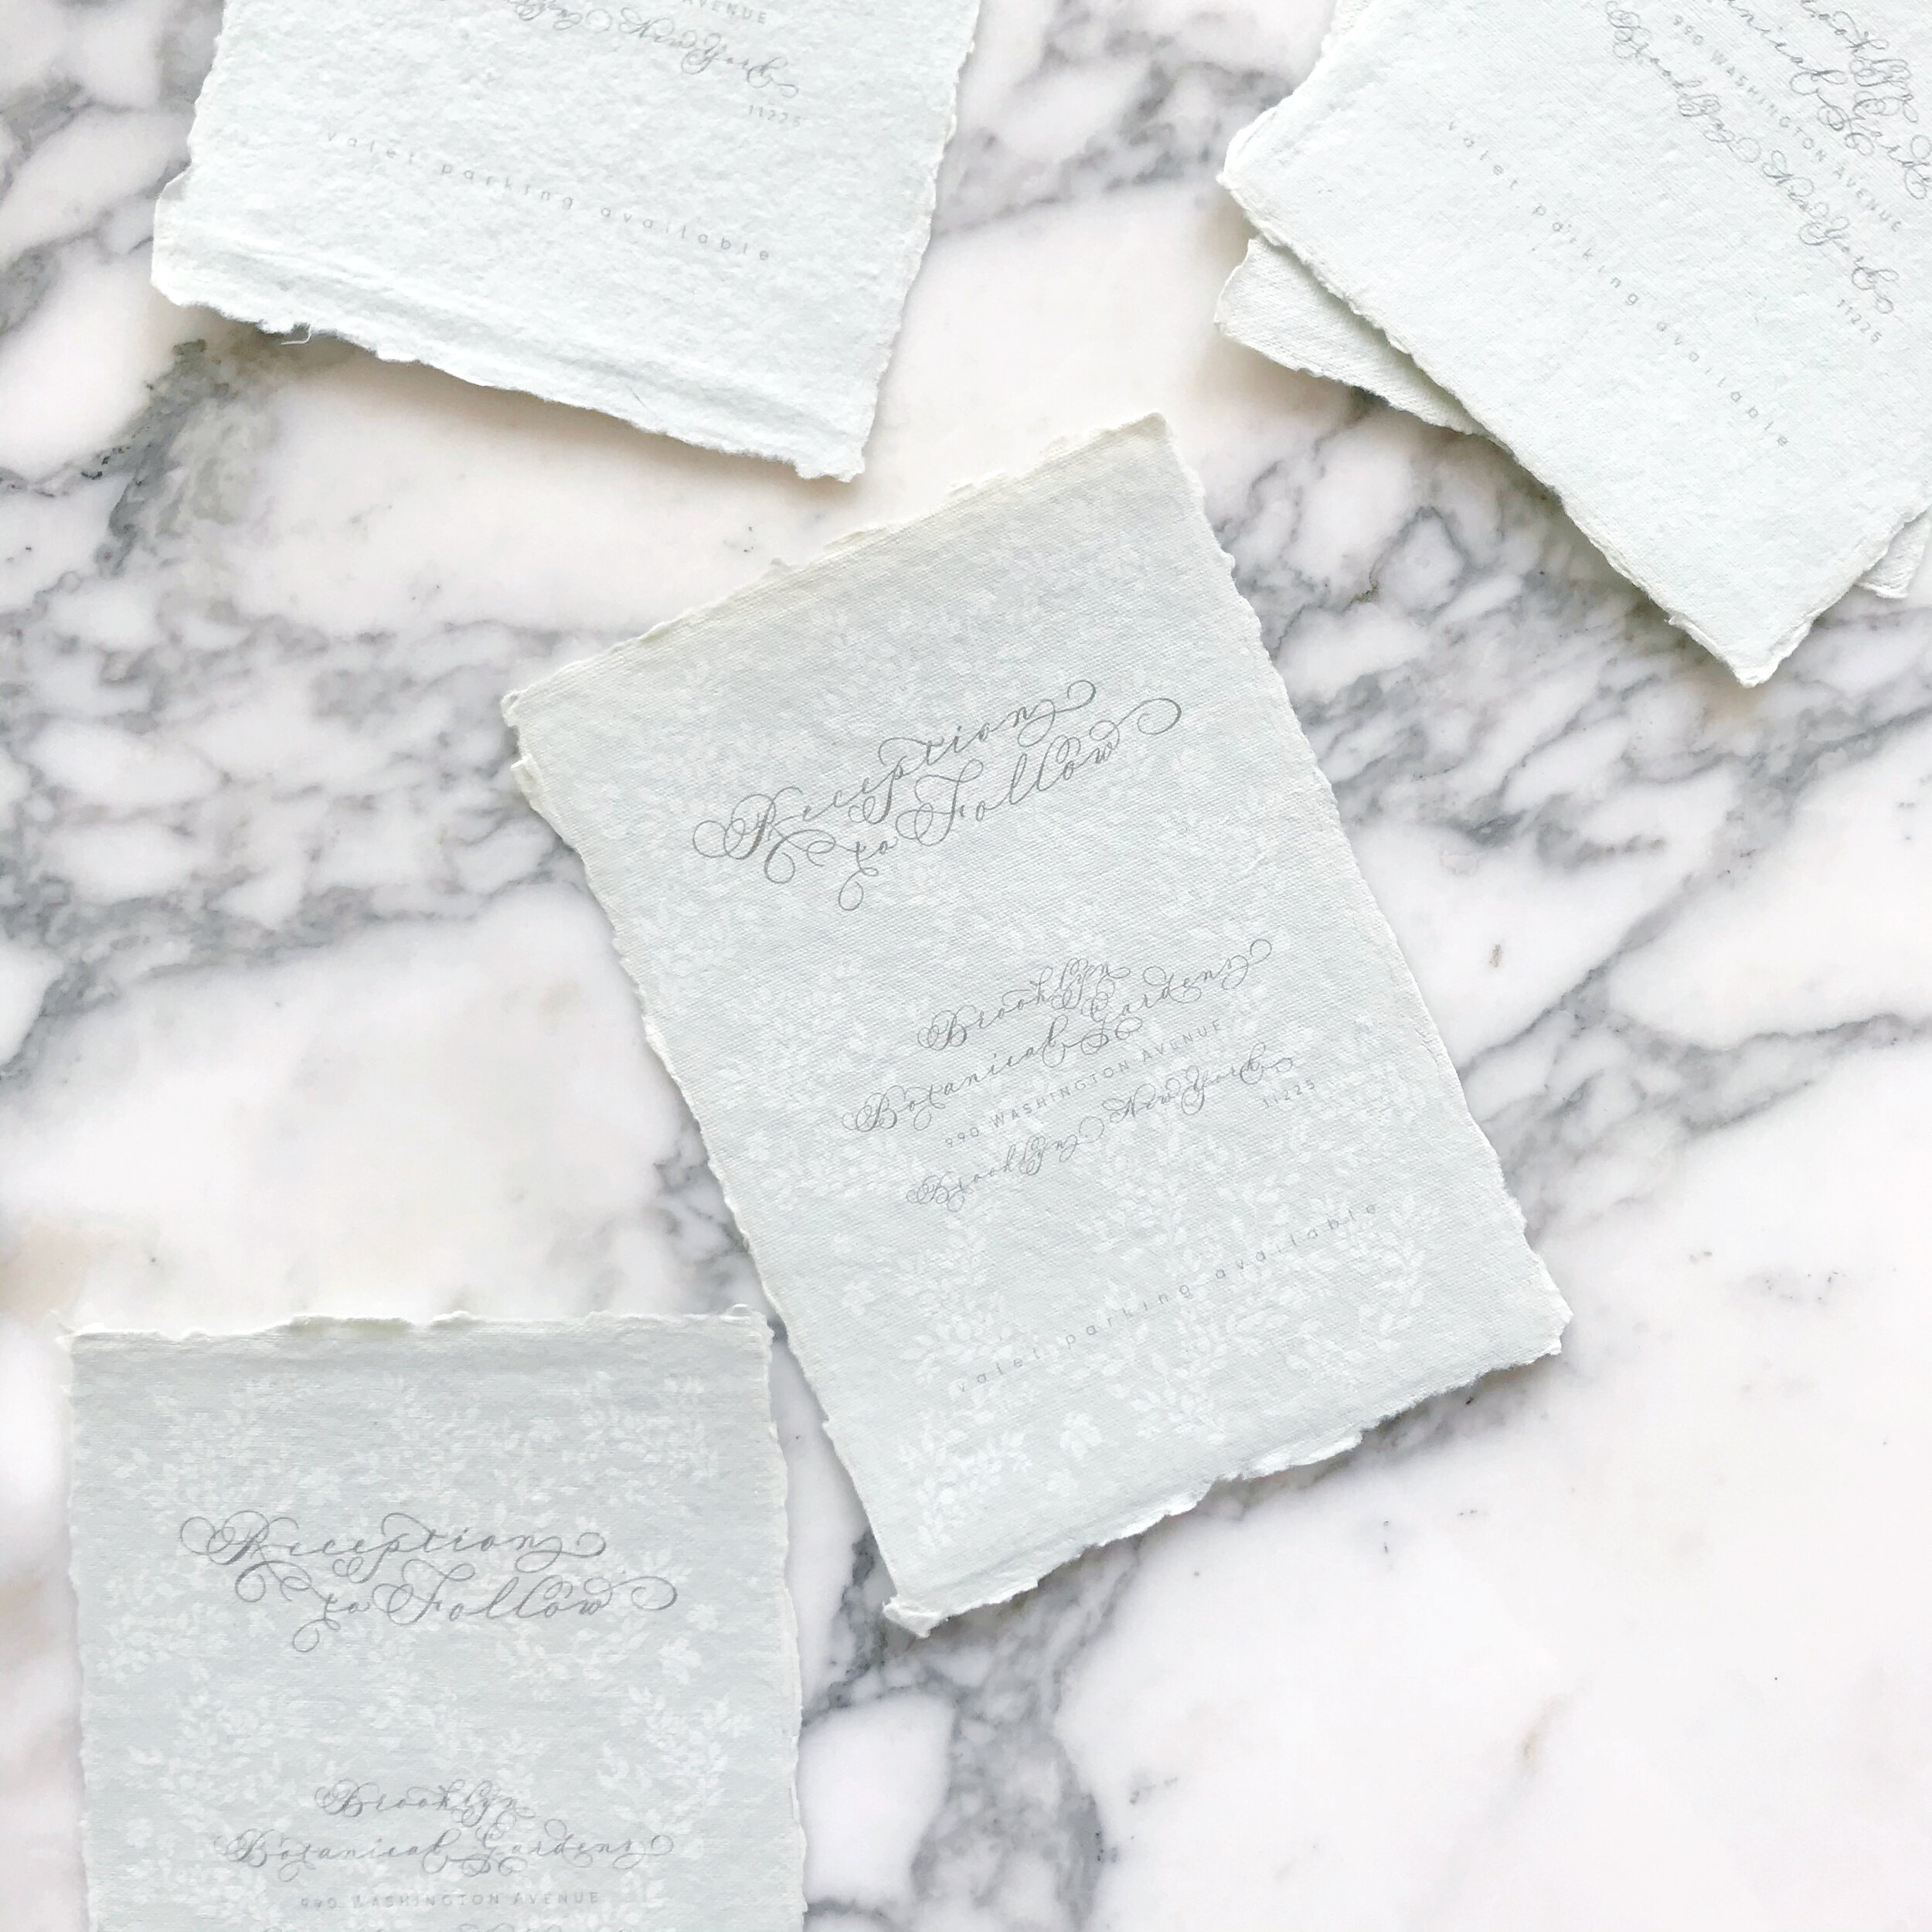 Spring handmade paper vellum custom wedding invitation  (Copy)